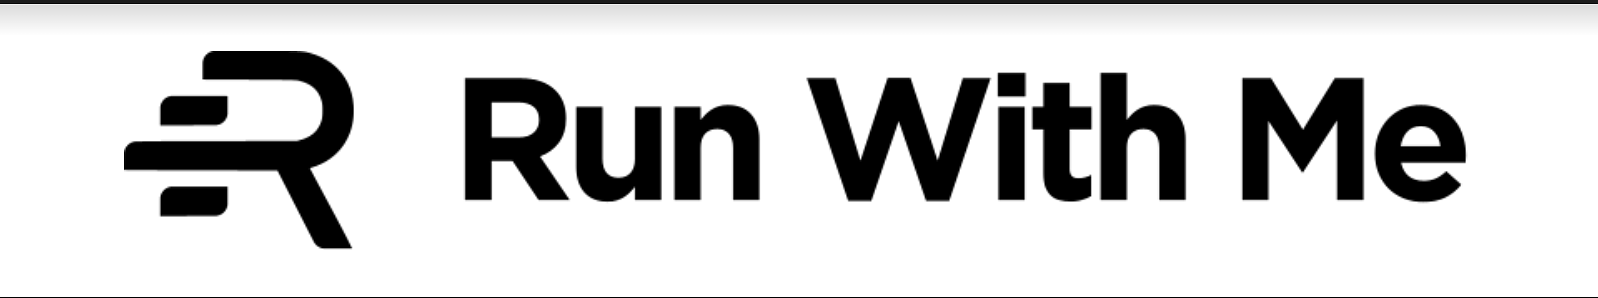 RunWithMe logo